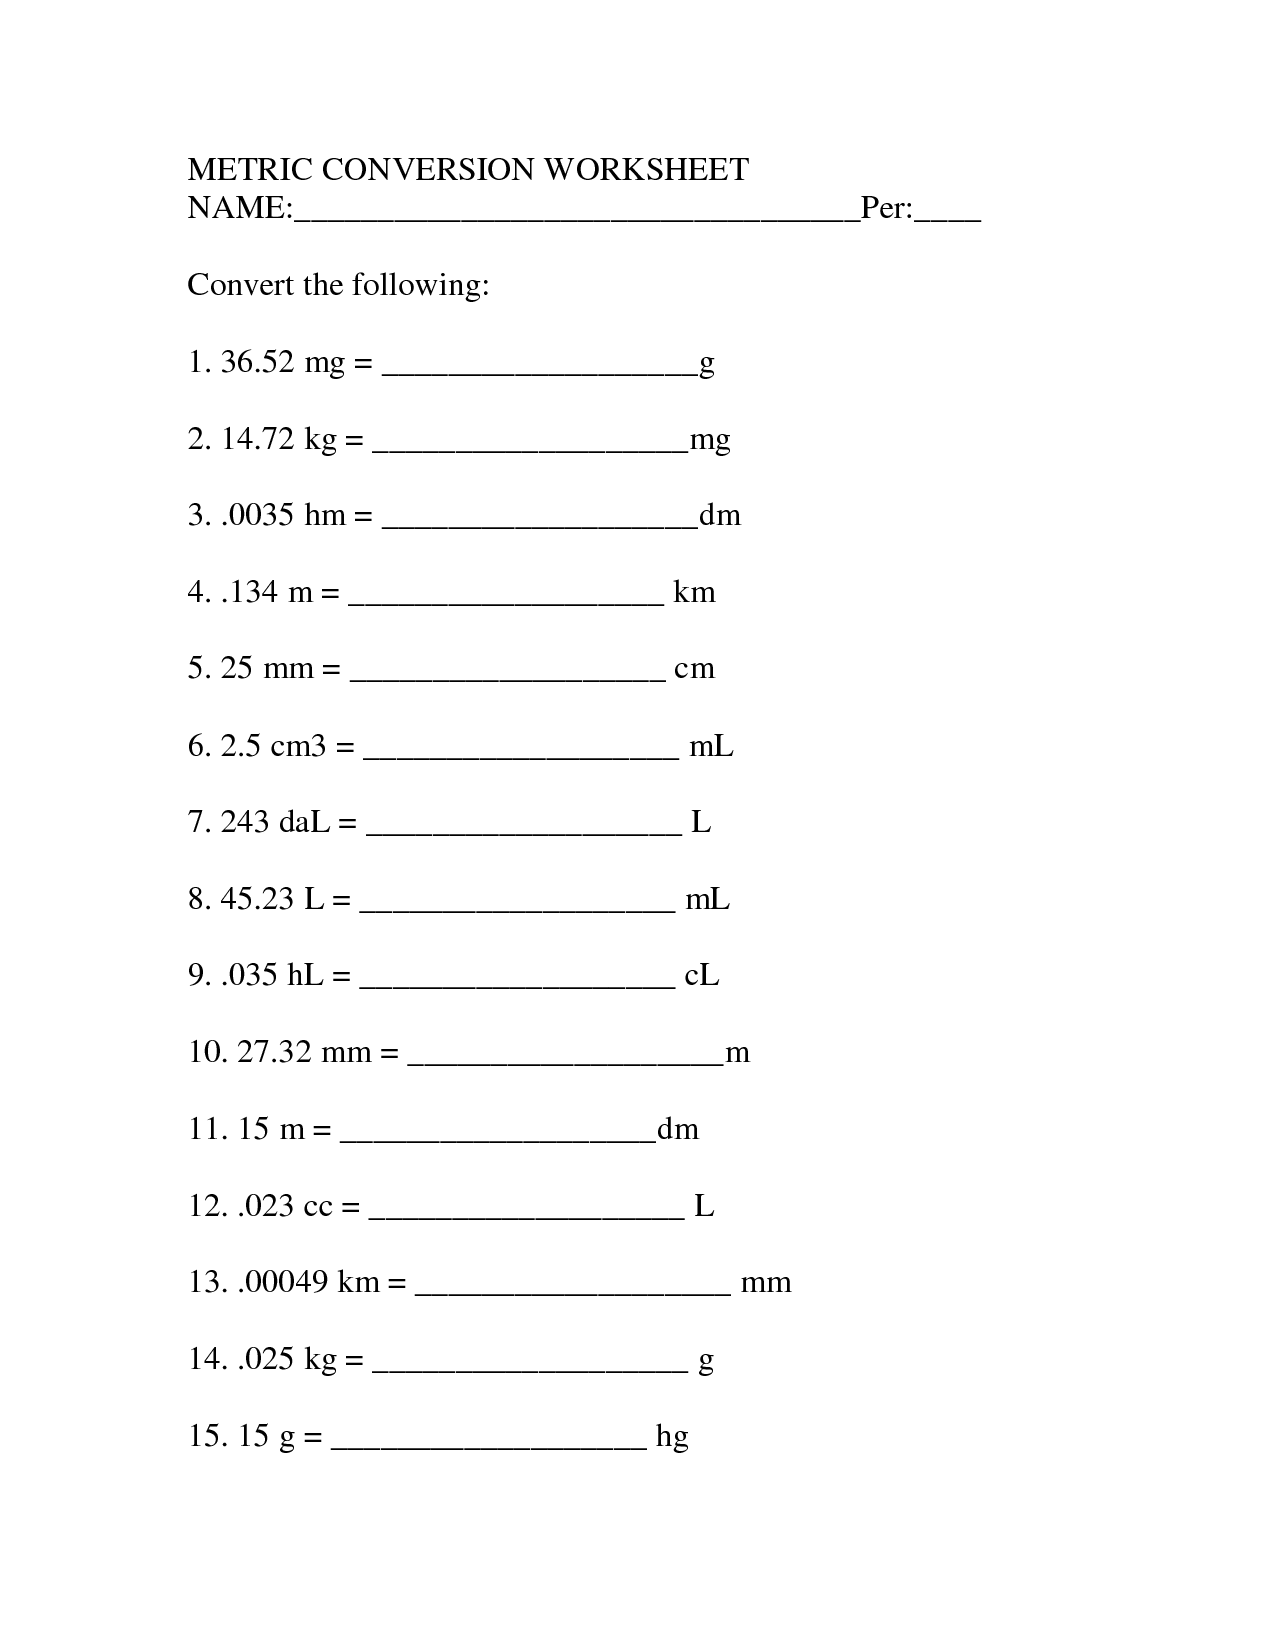 metric-measurement-conversion-worksheet-for-4th-5th-grade-lesson-planet-riset